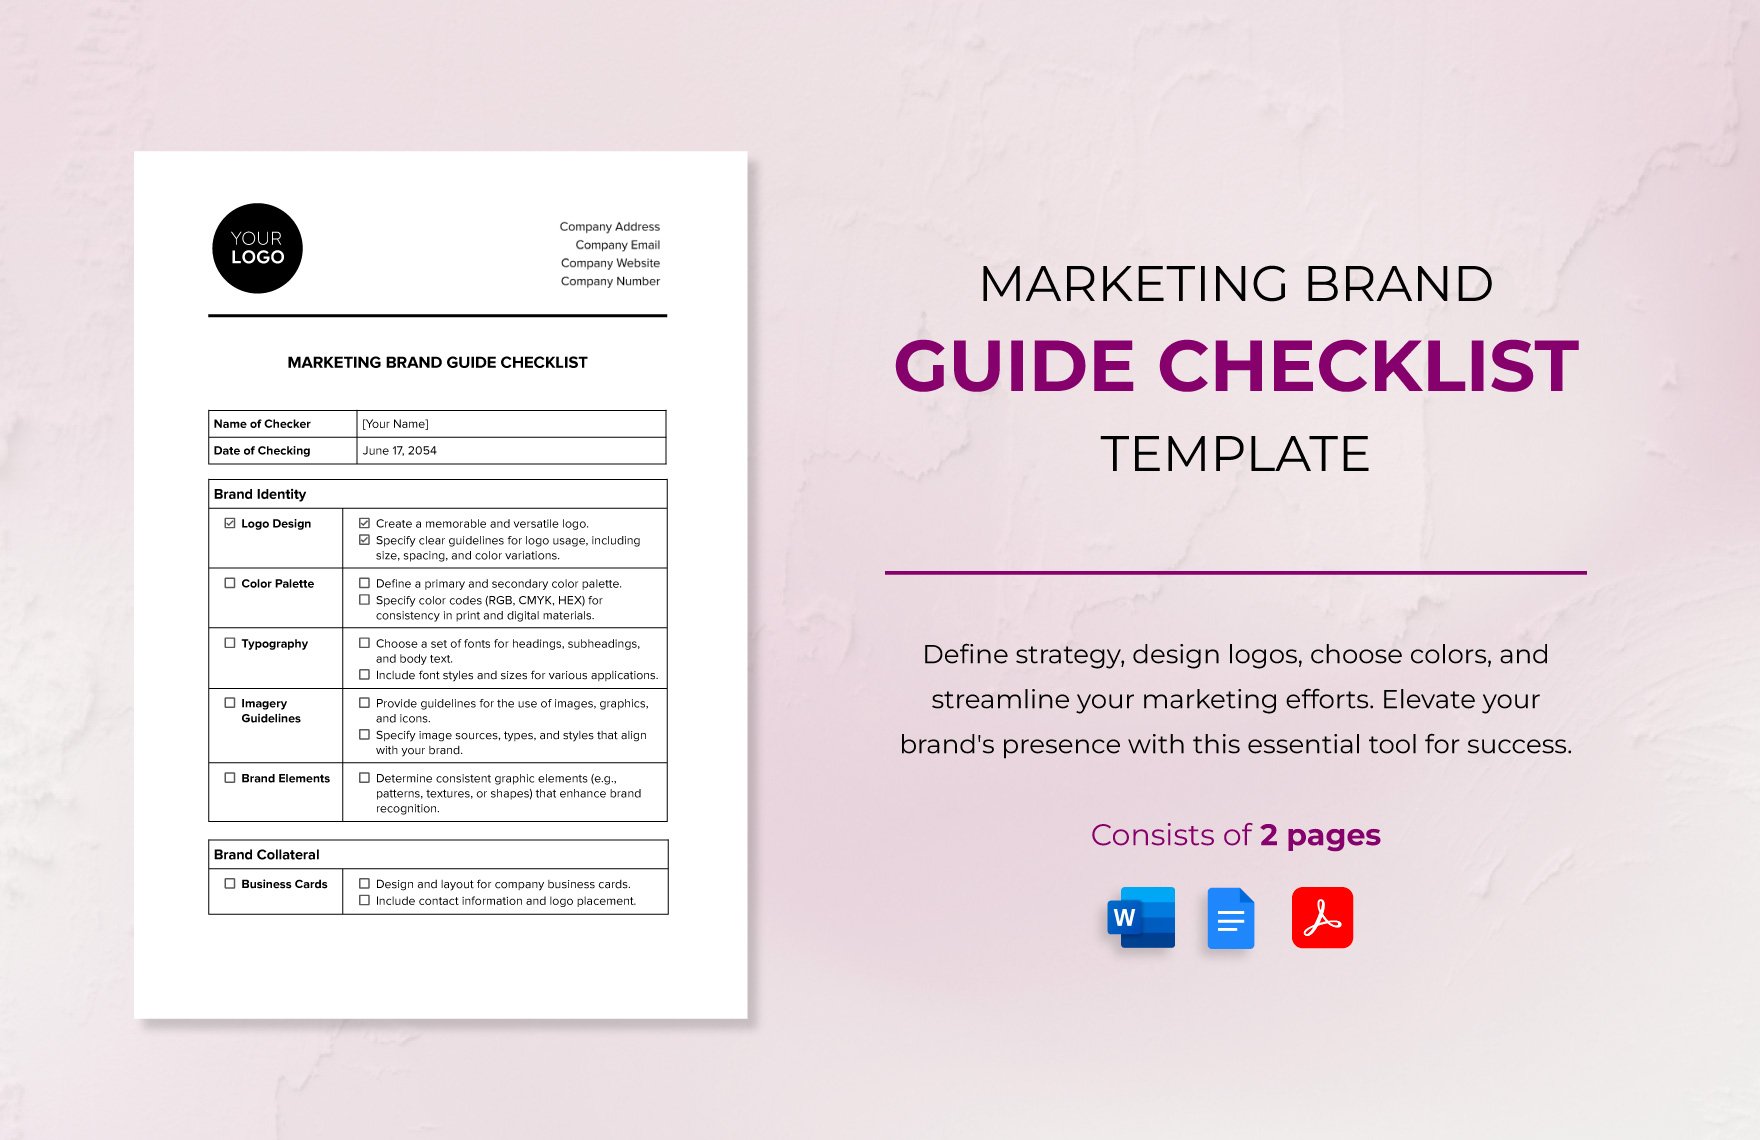 Marketing Brand Guide Checklist Template in Word, Google Docs, PDF